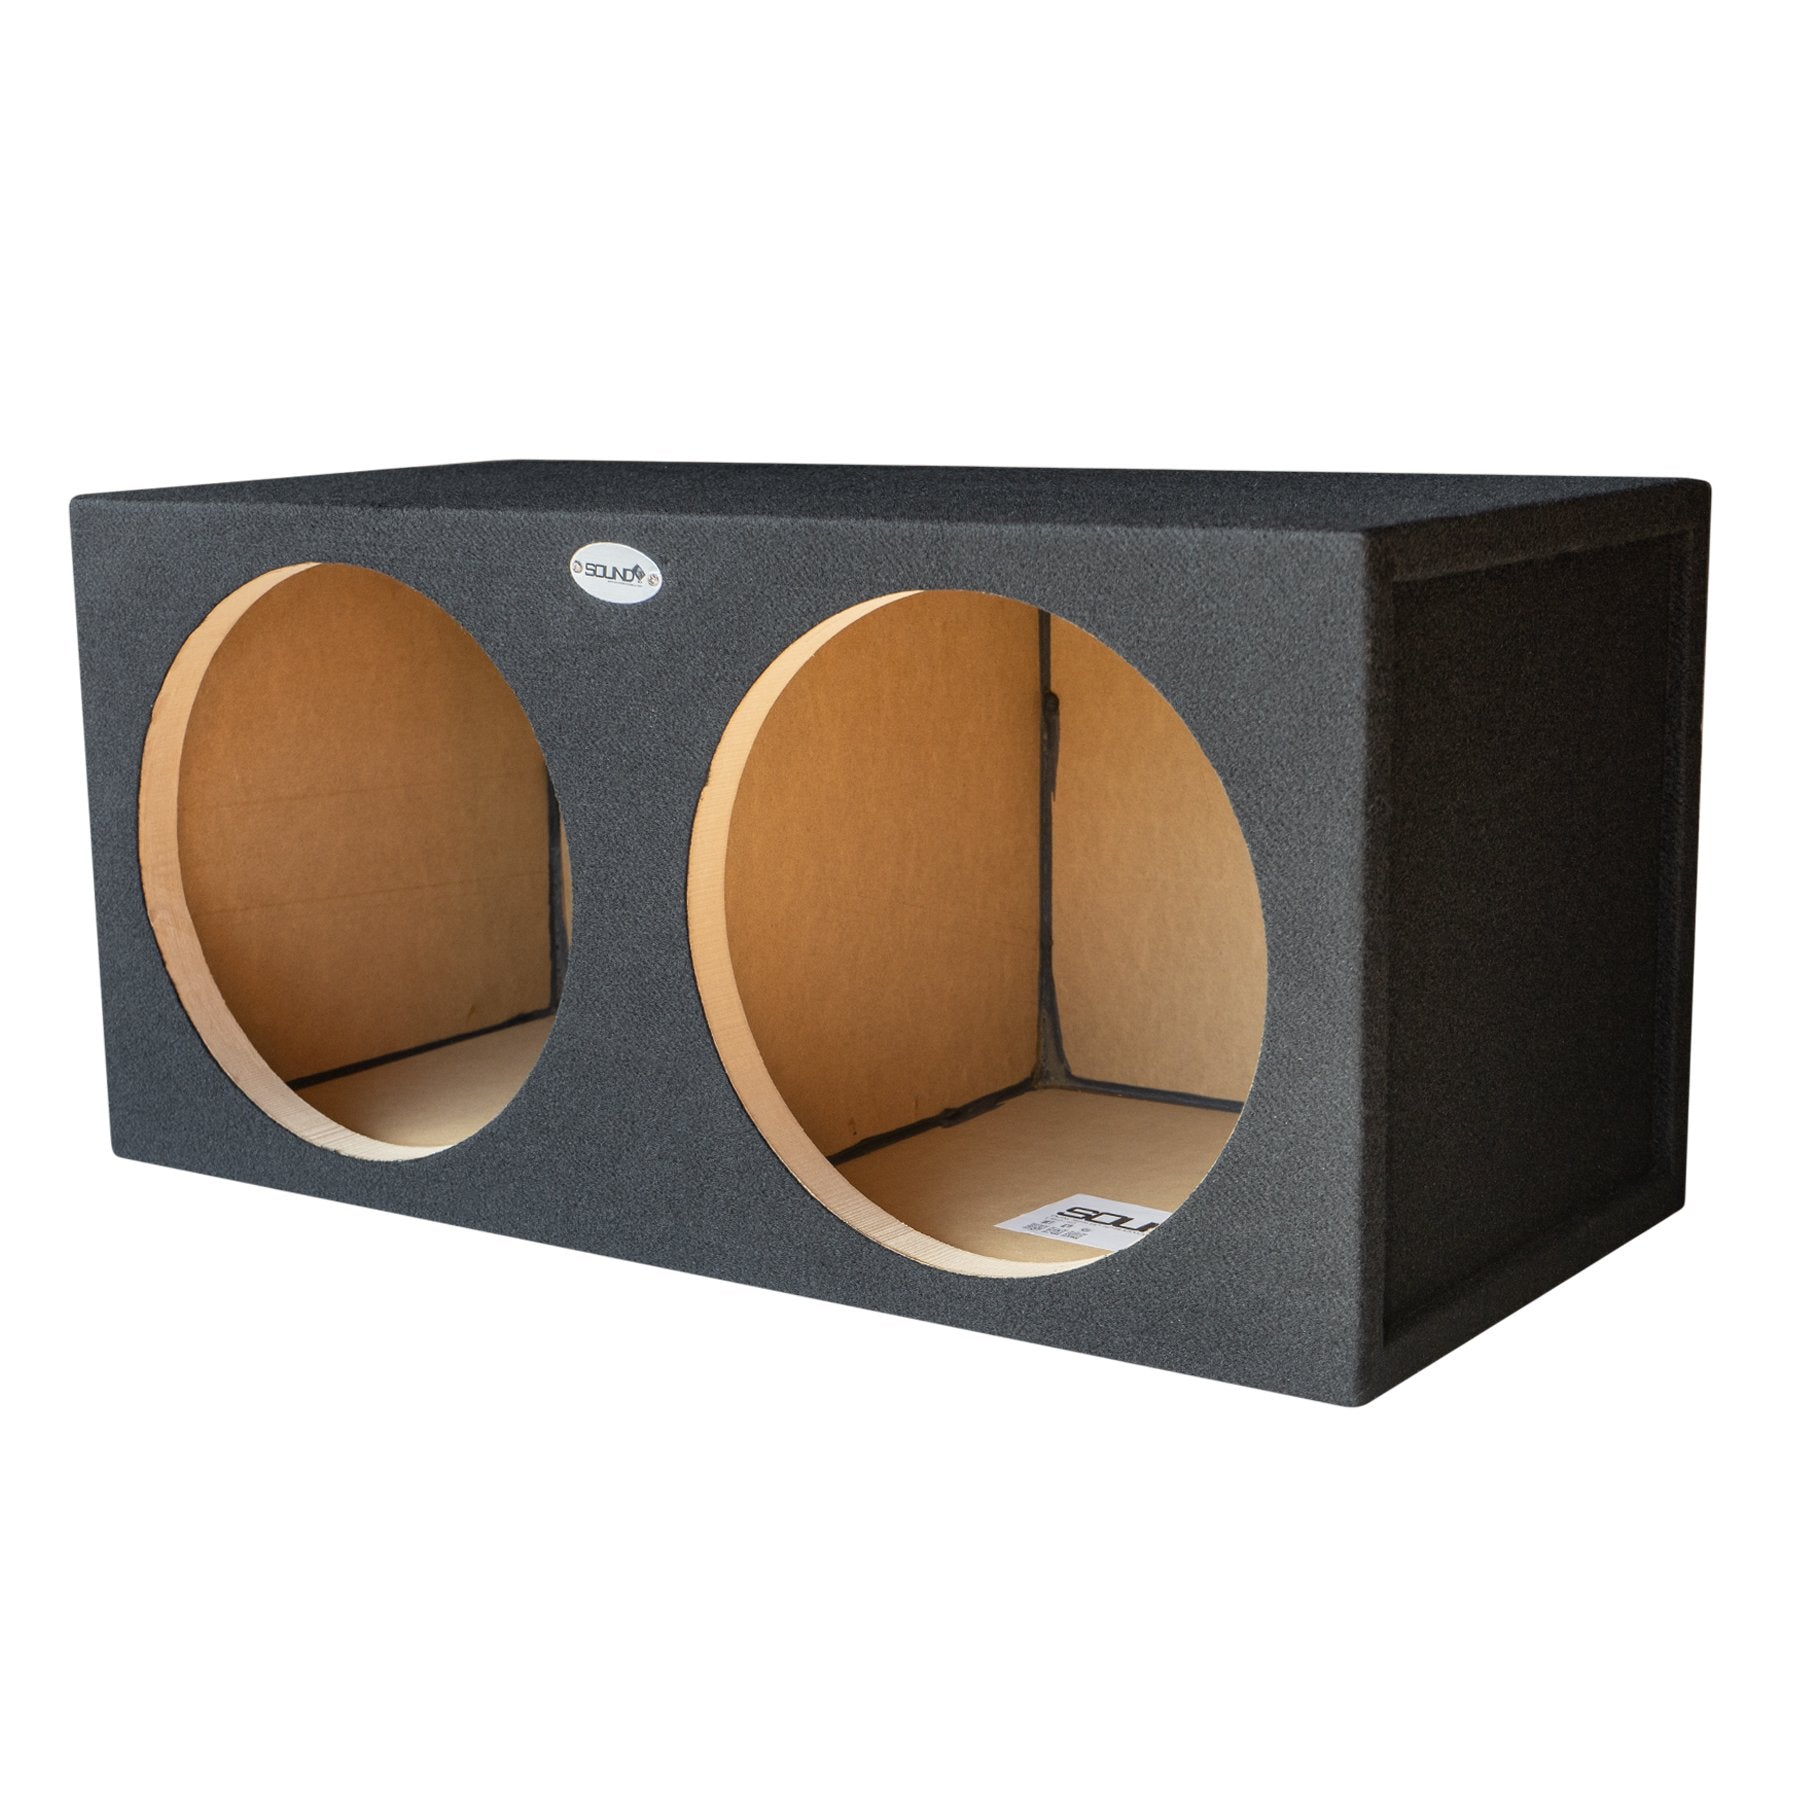 SoundBox E Series  Dual 15" Sealed Subwoofer Enclosure